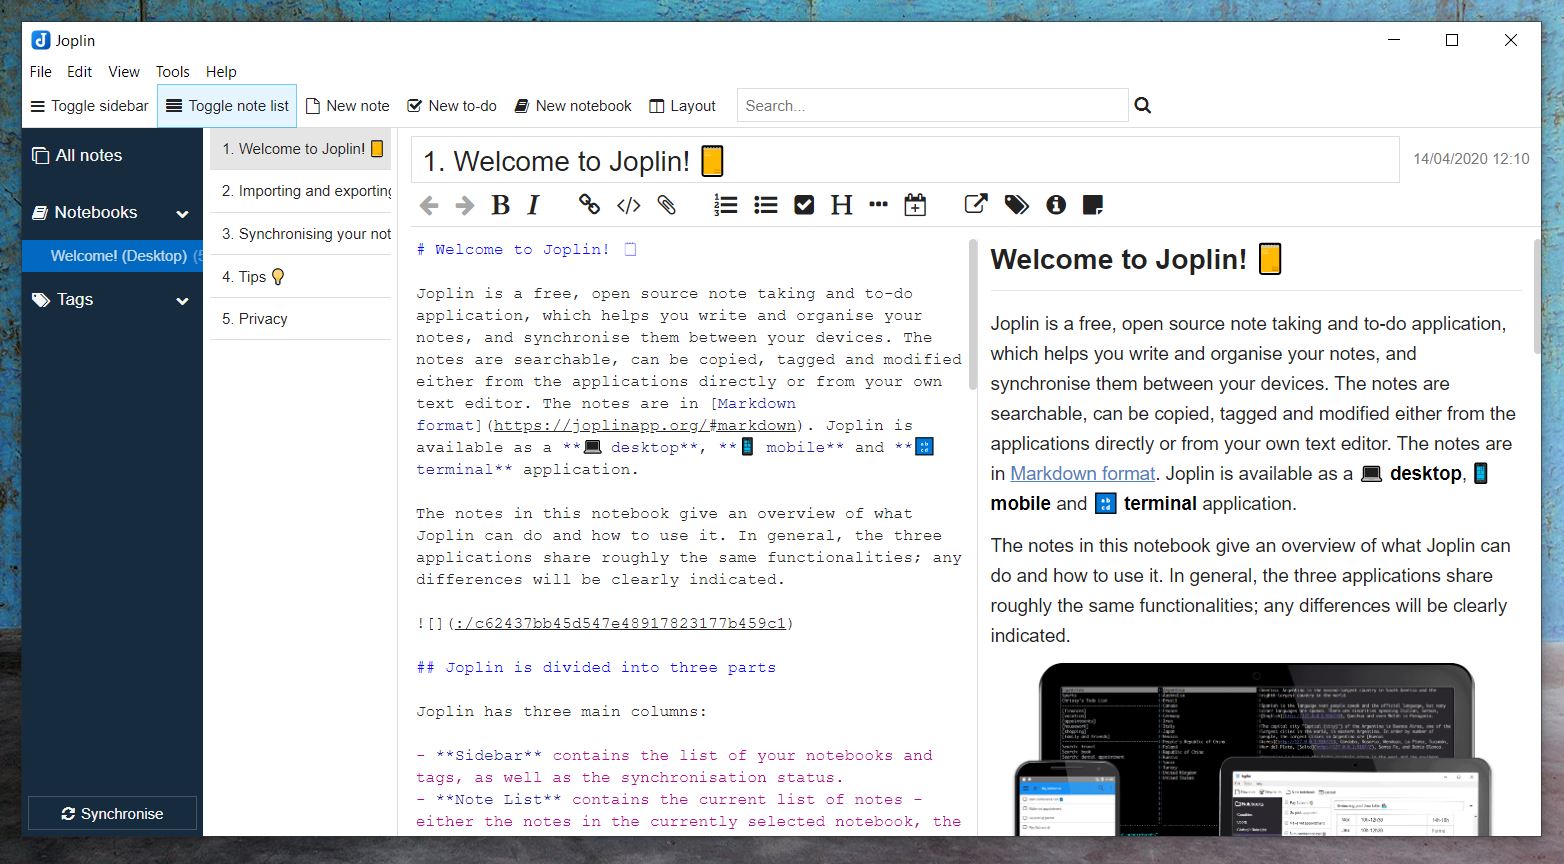 jopin_app_welcome_screen.JPG